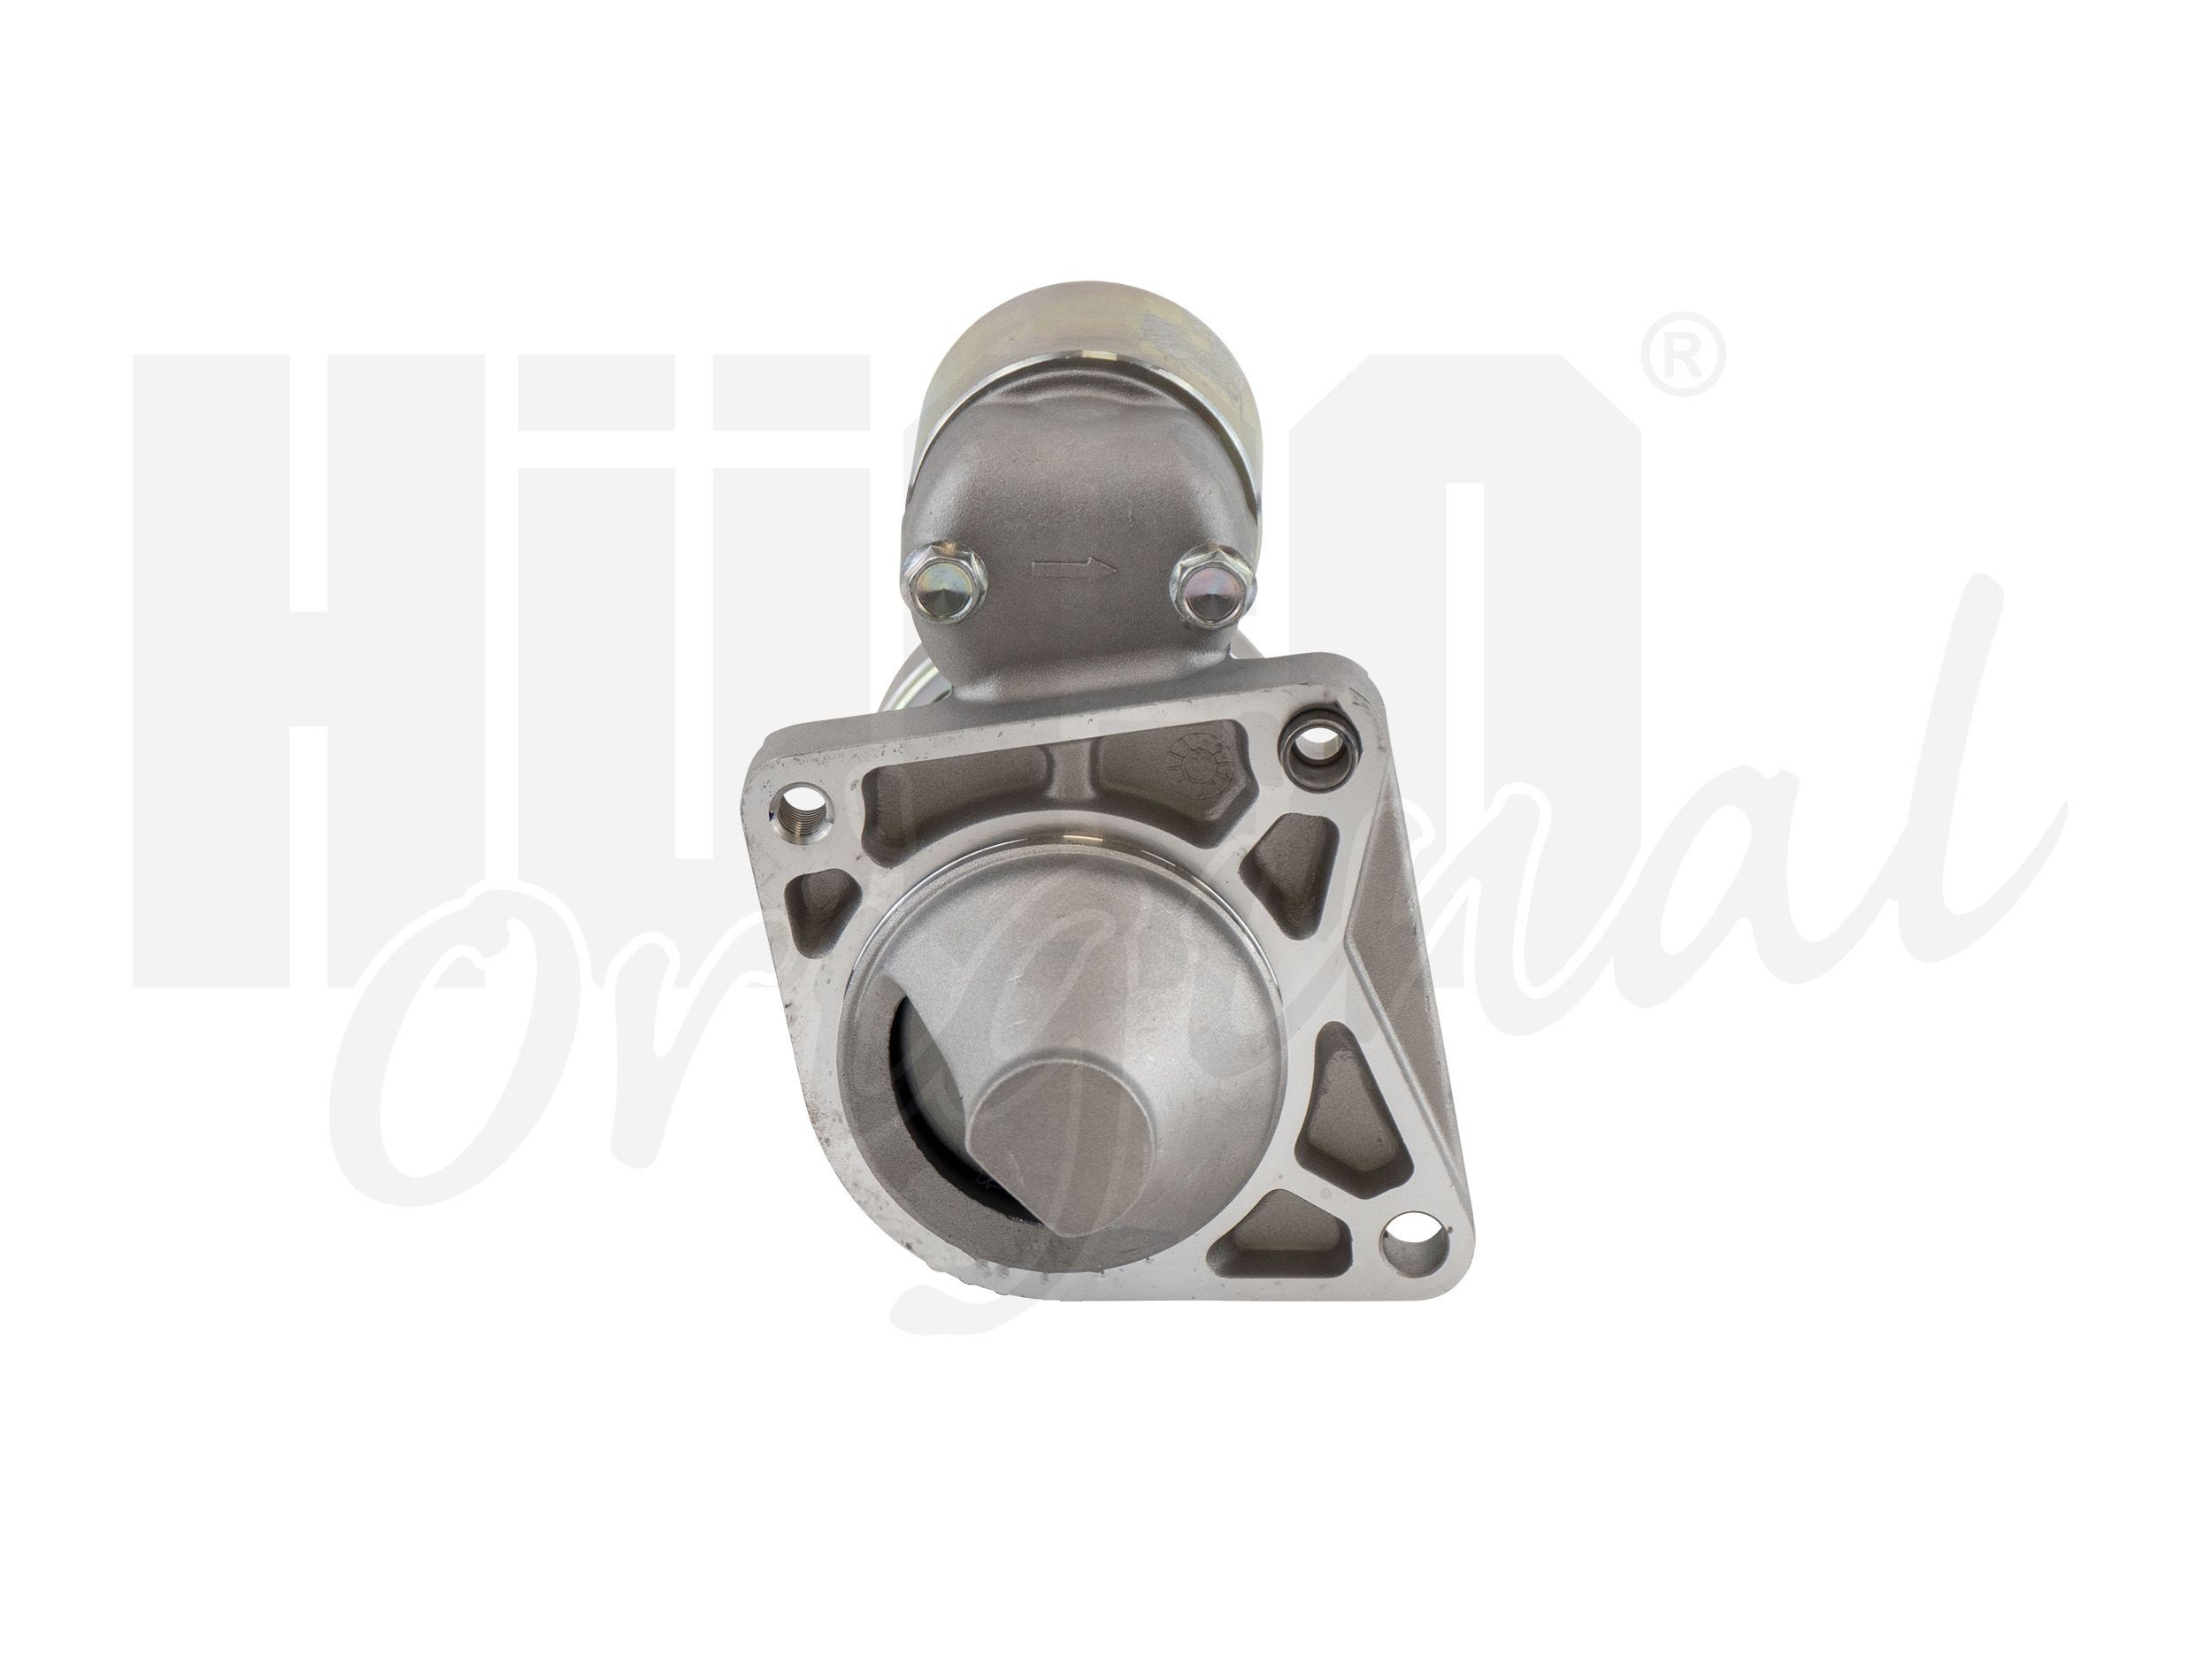 136908 Engine starter motor Hueco HITACHI 136908 review and test